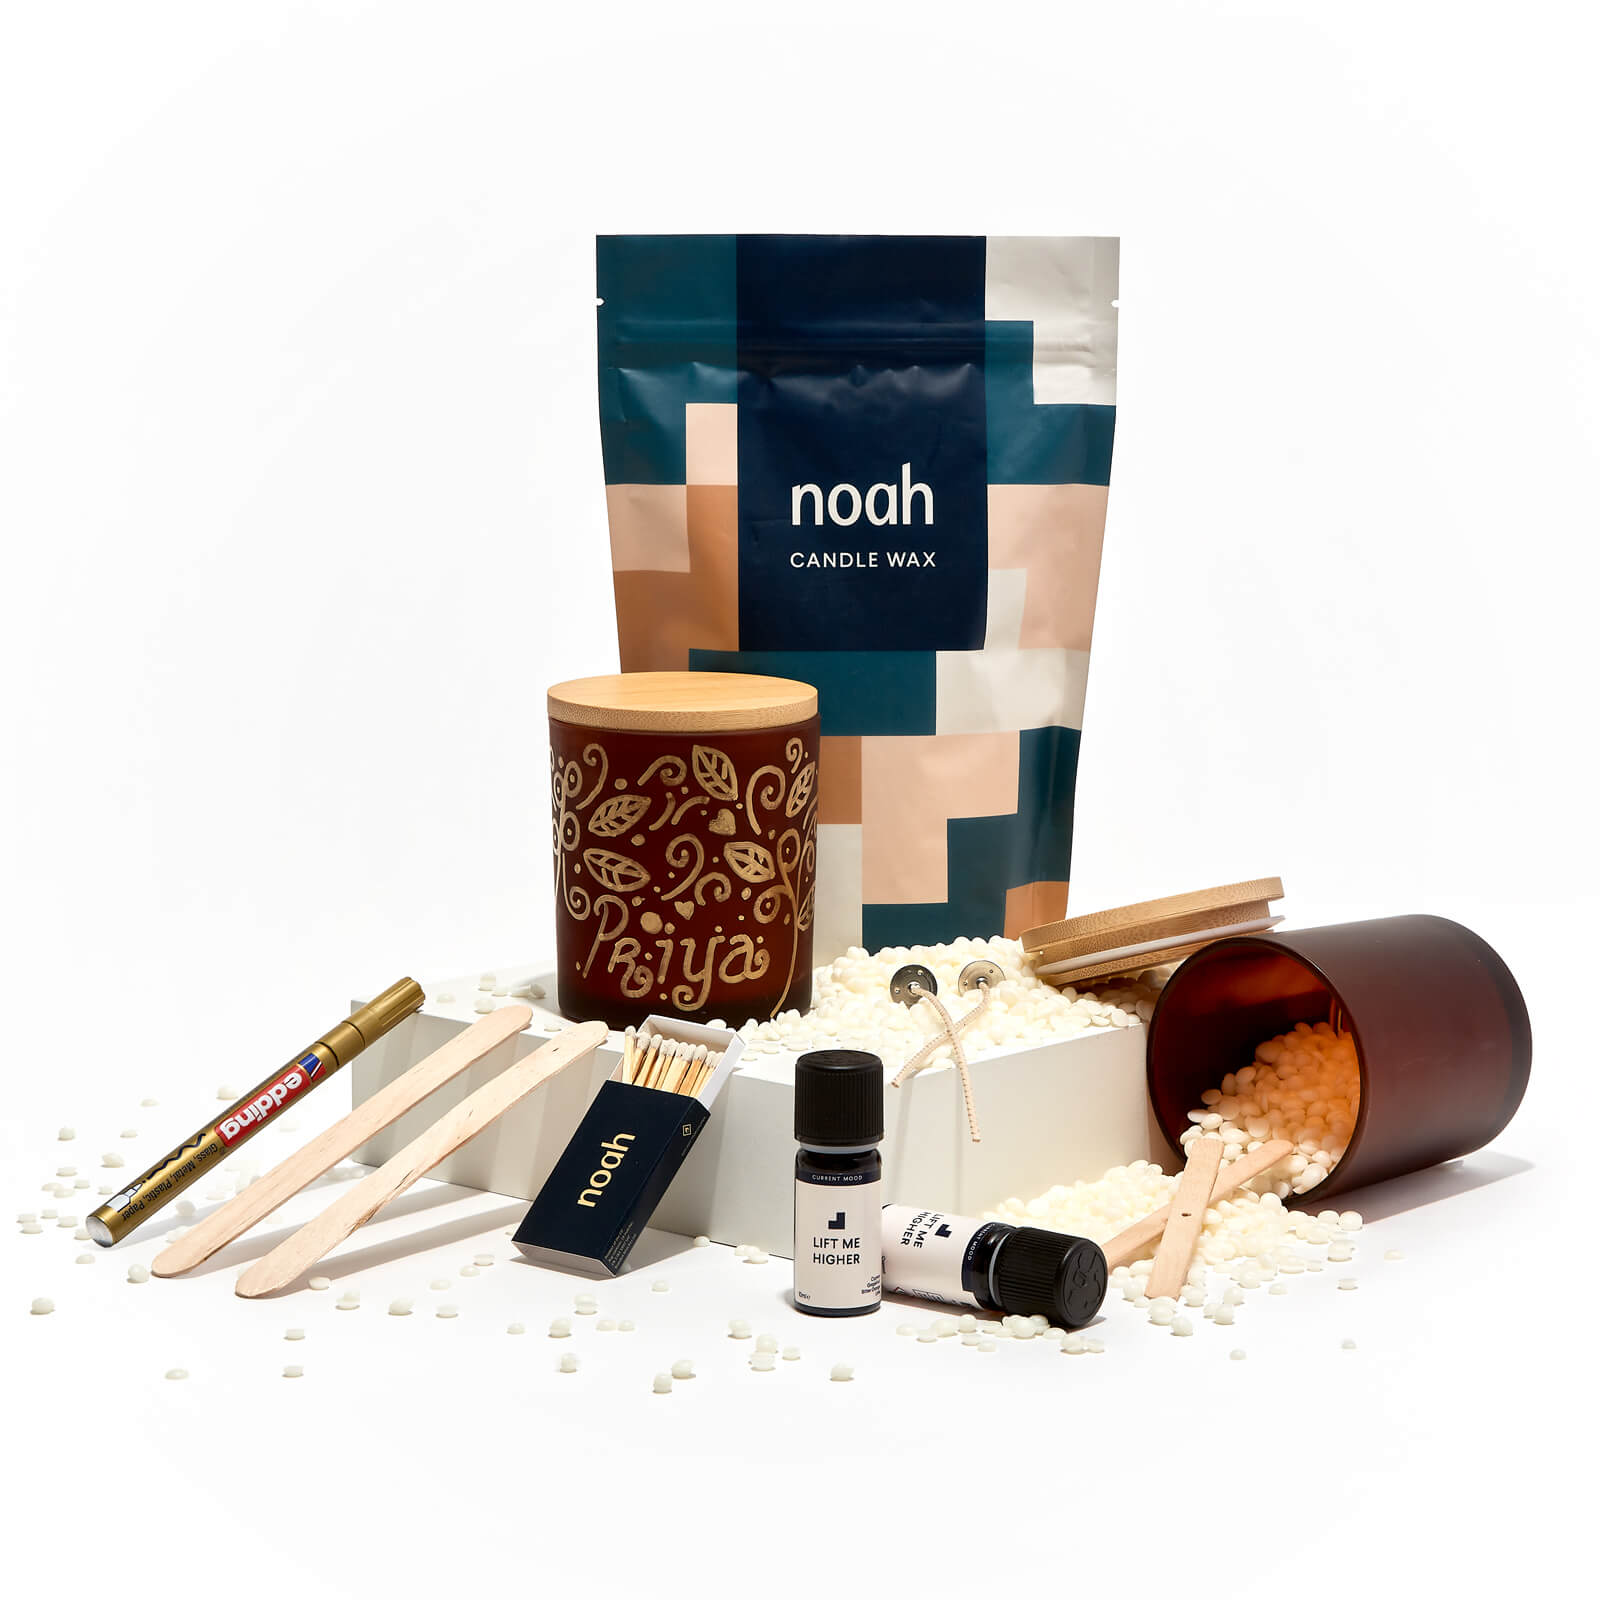 Kit de inicio para hacer velas  noah - Kits de manualidades